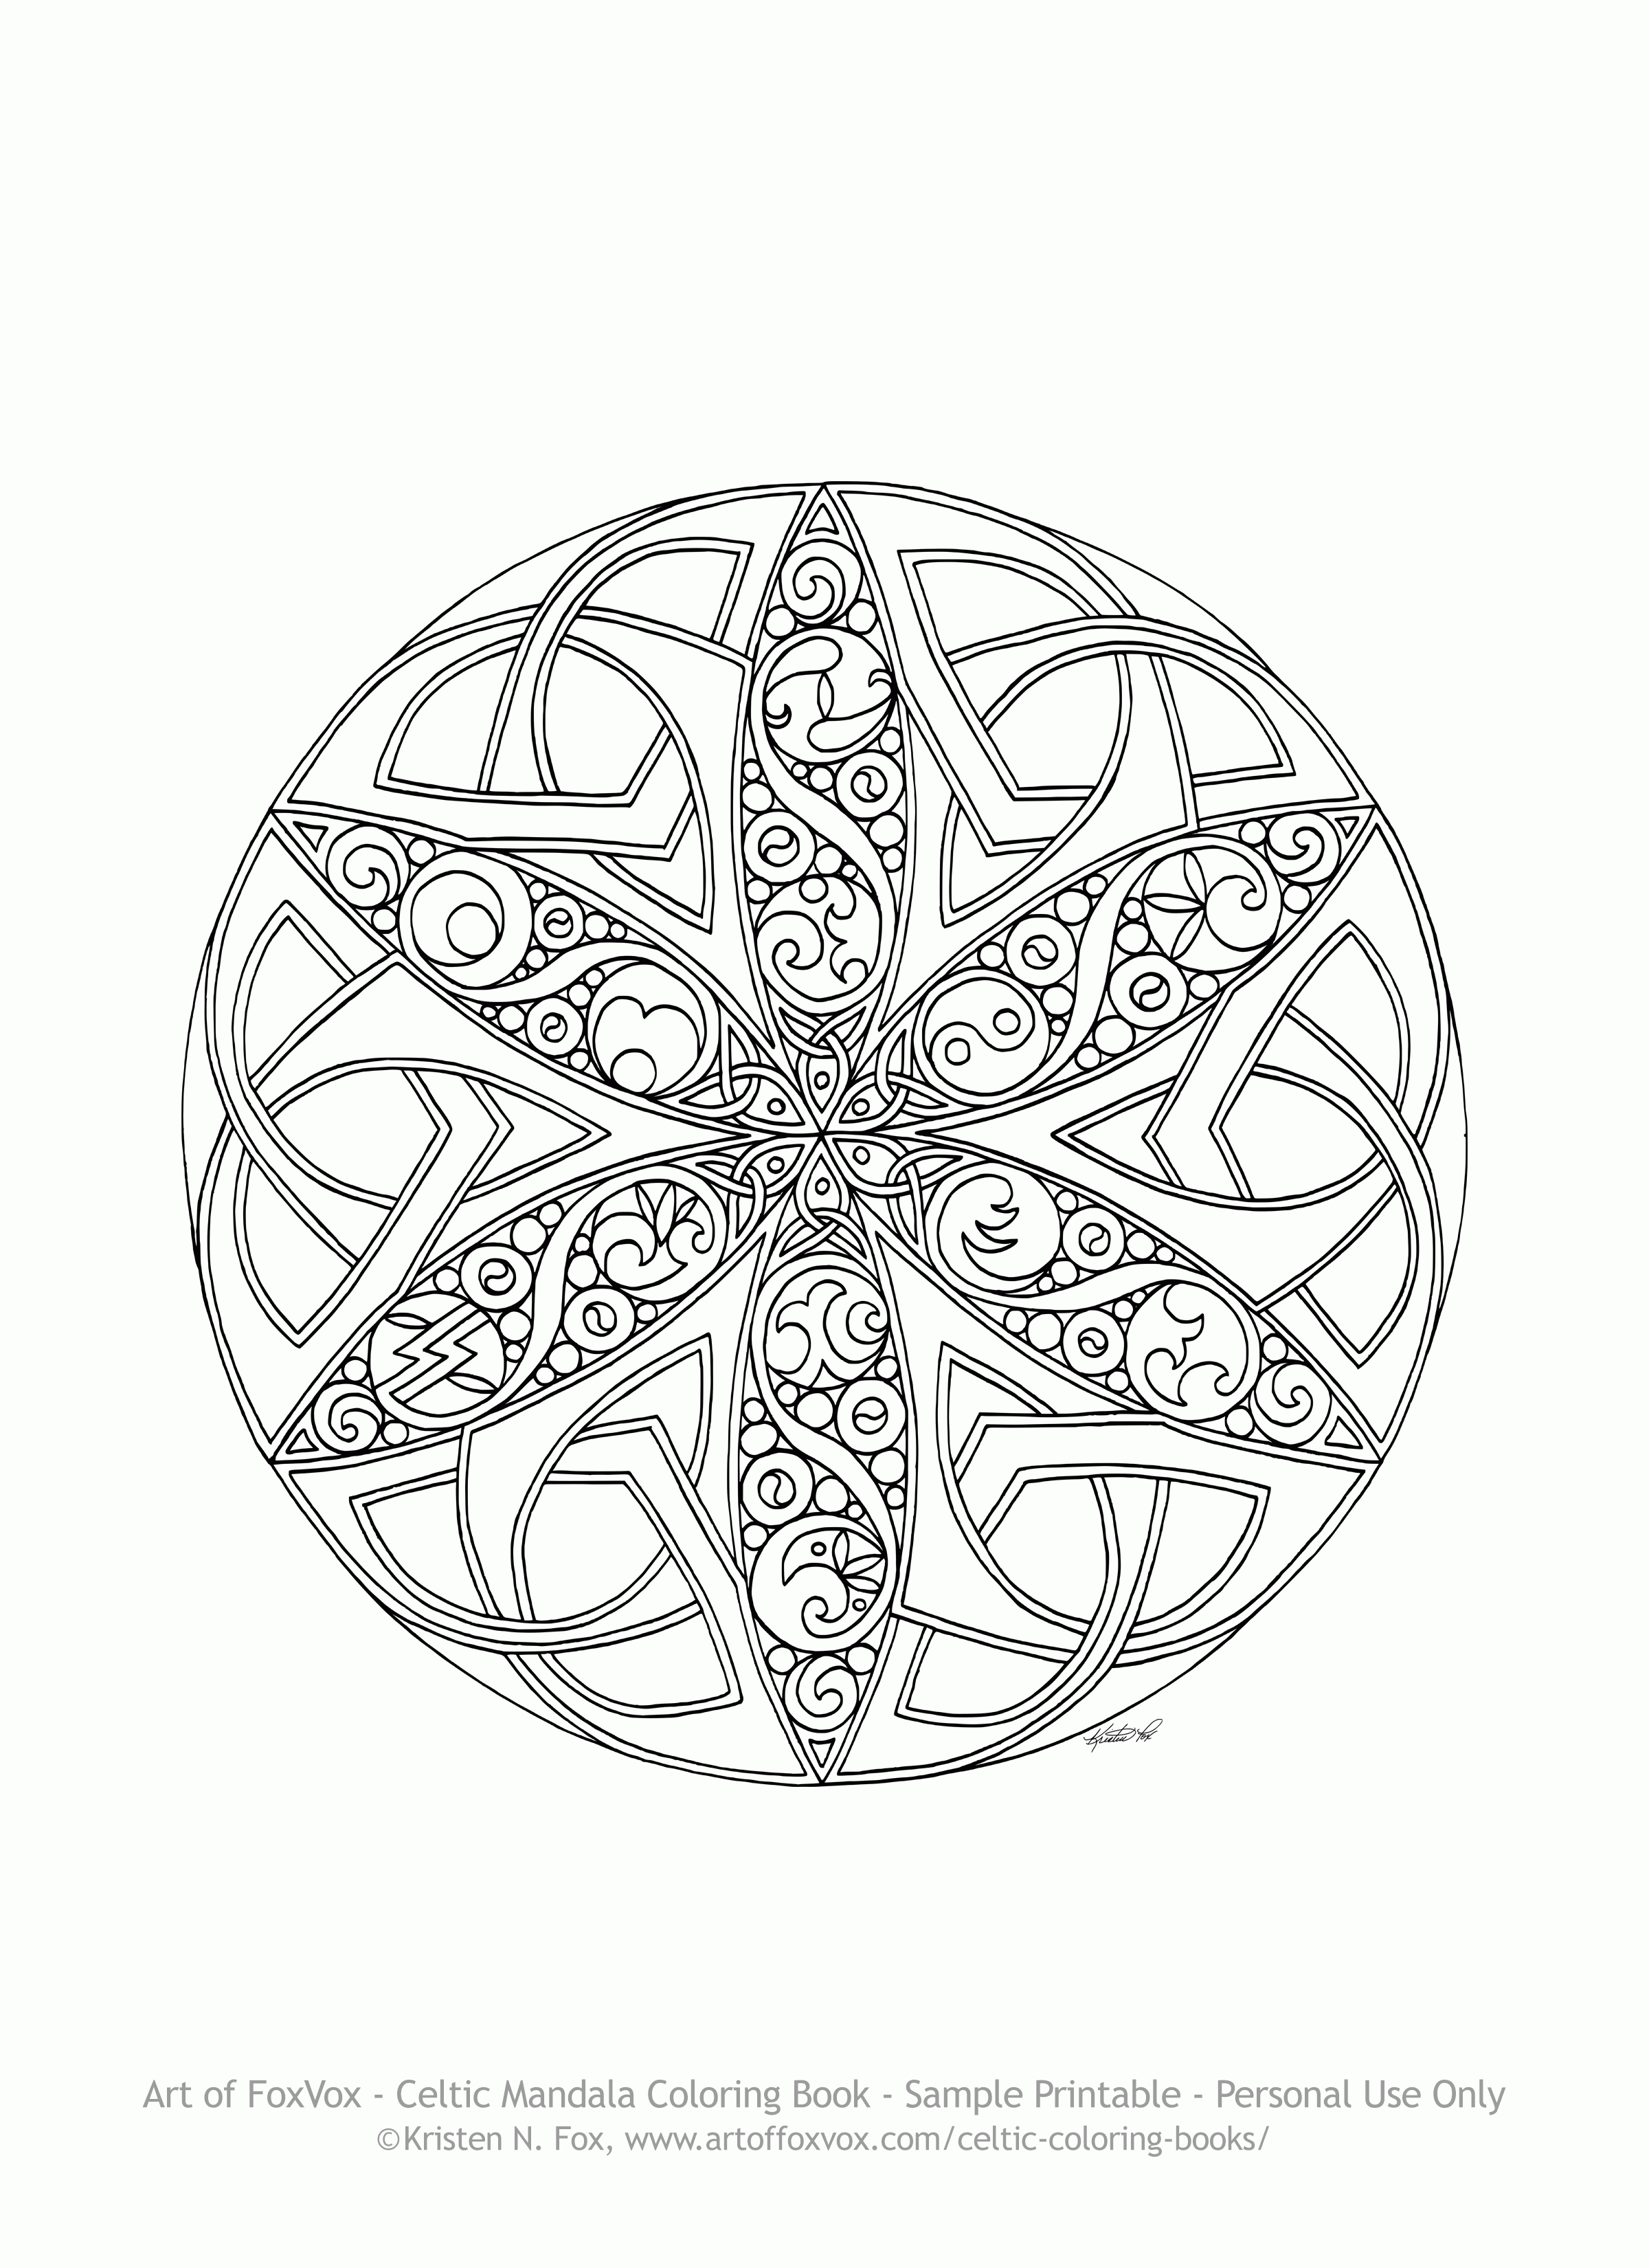 Free Celtic Mandala Coloring Page to Print – Art of FoxVox ...